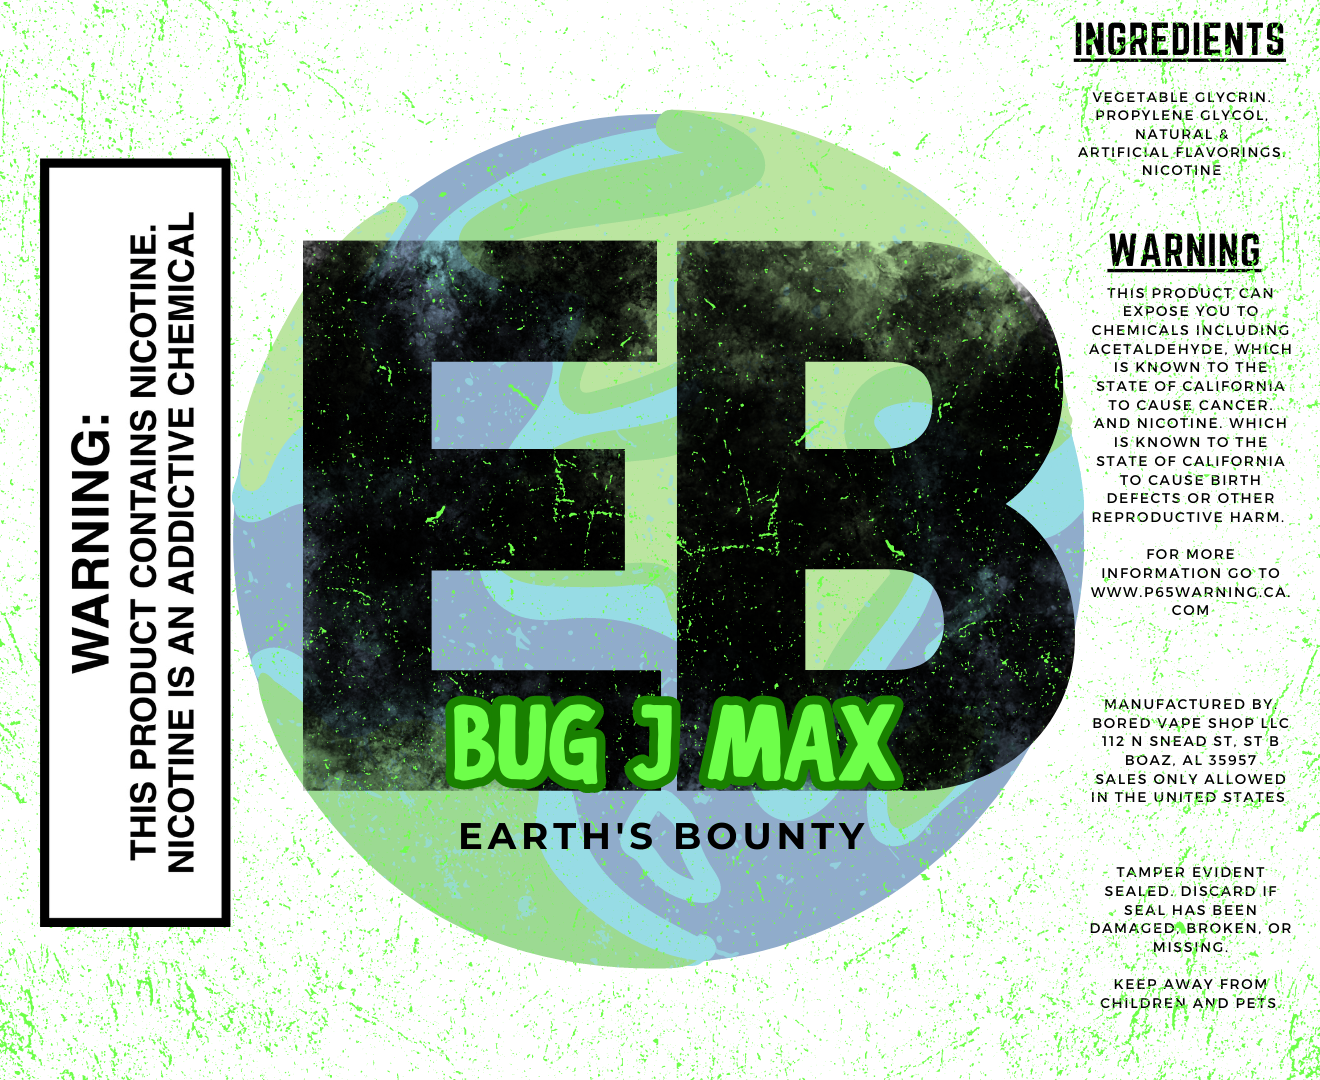 Bug J Max